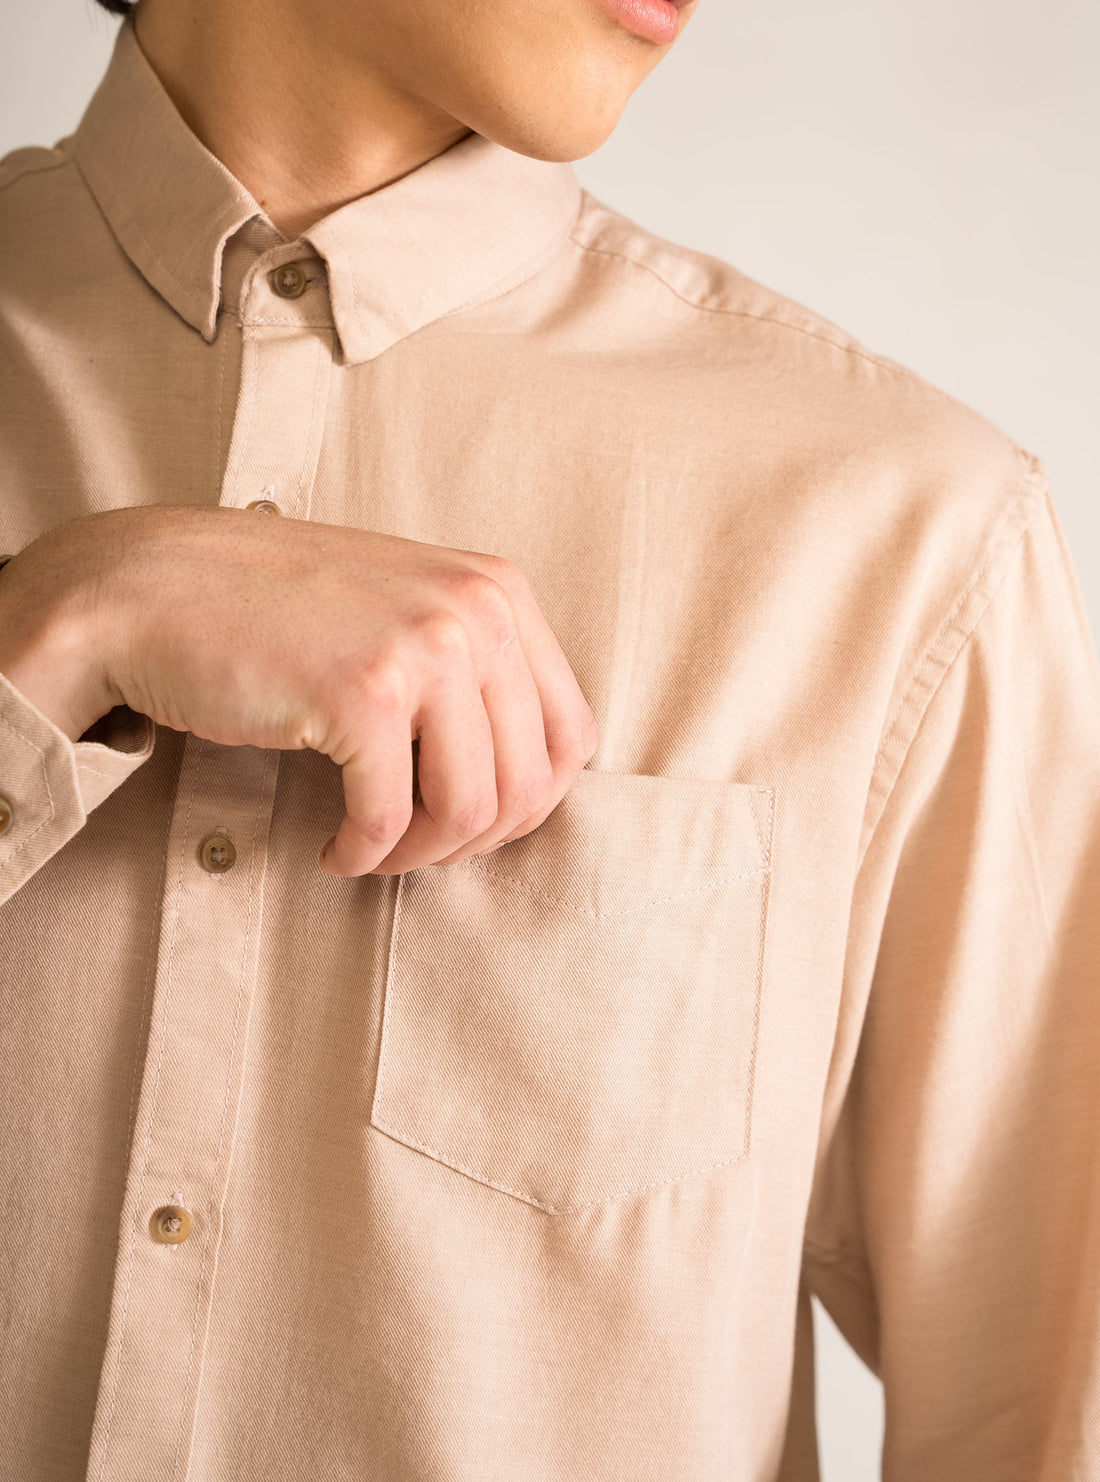 Alibi Long Sleeve Shirt, Kaky